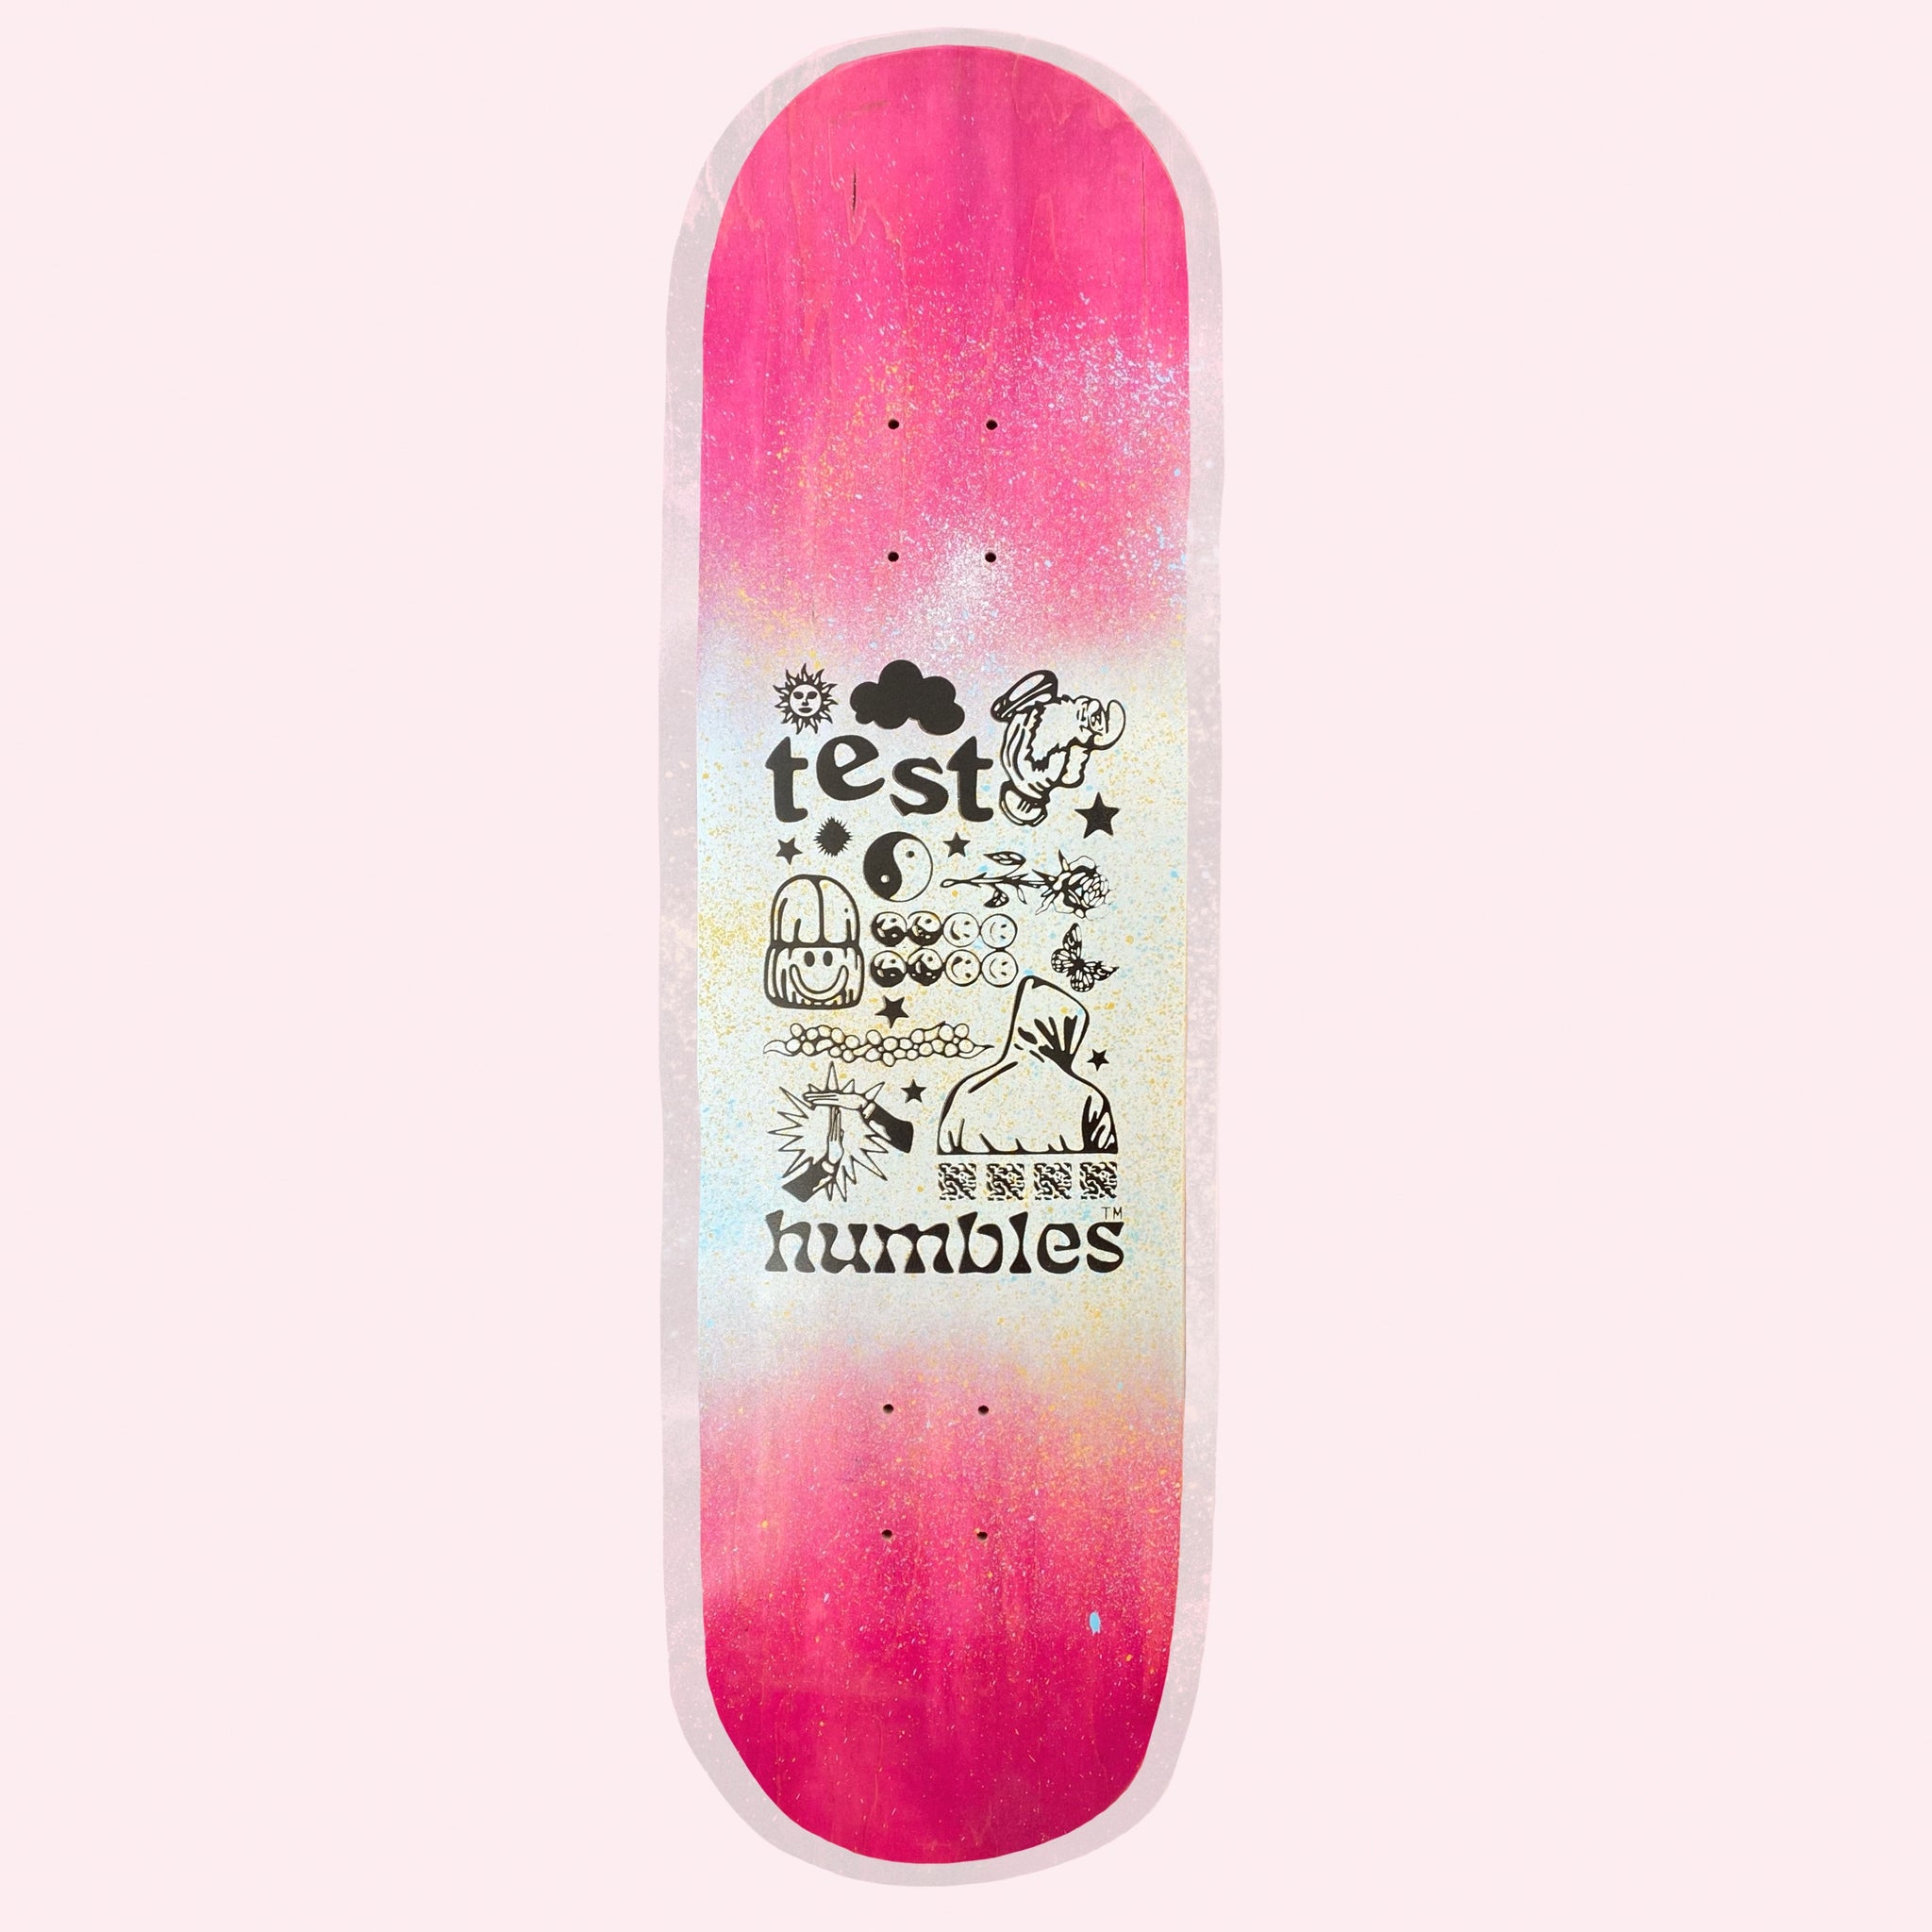 “test skateboarding” collection